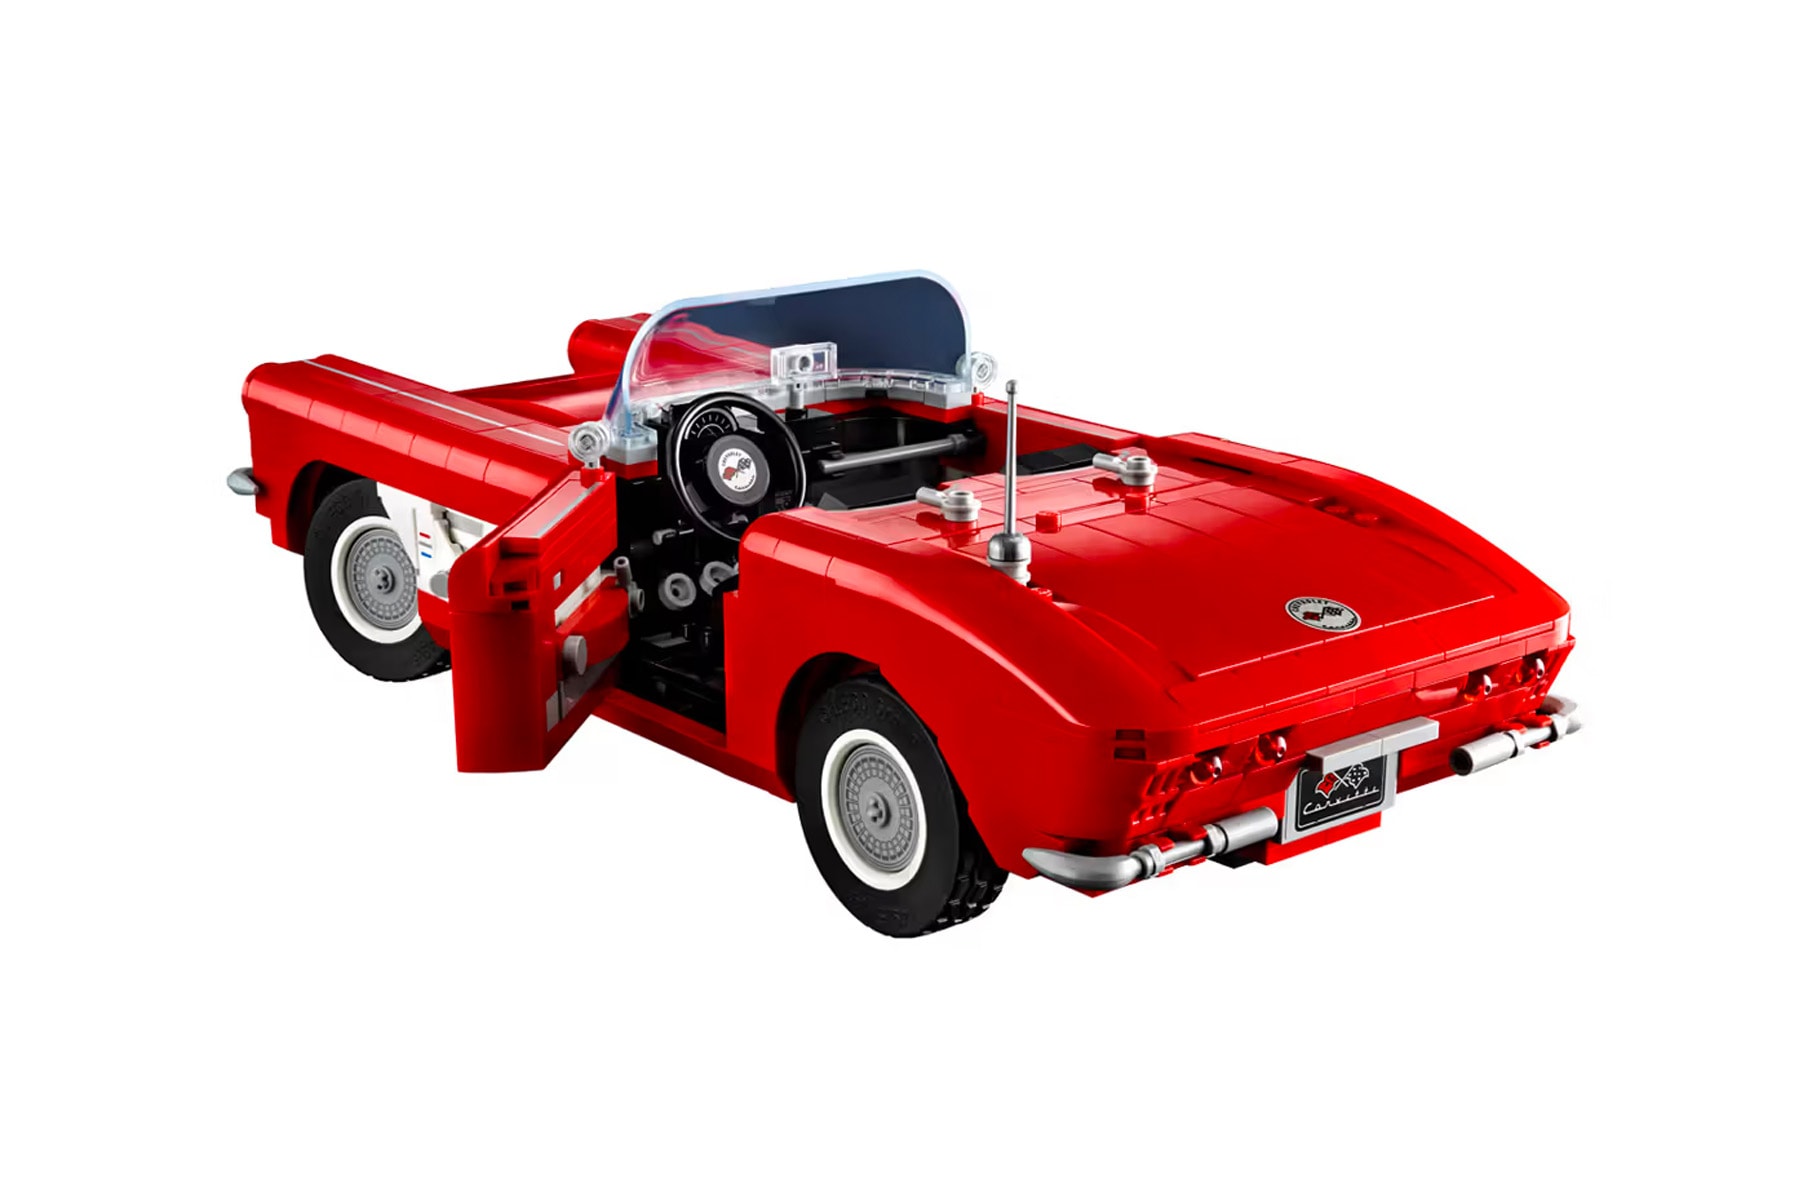 LEGO 推出經典車型 1961 Chevrolet Corvette 積木模型